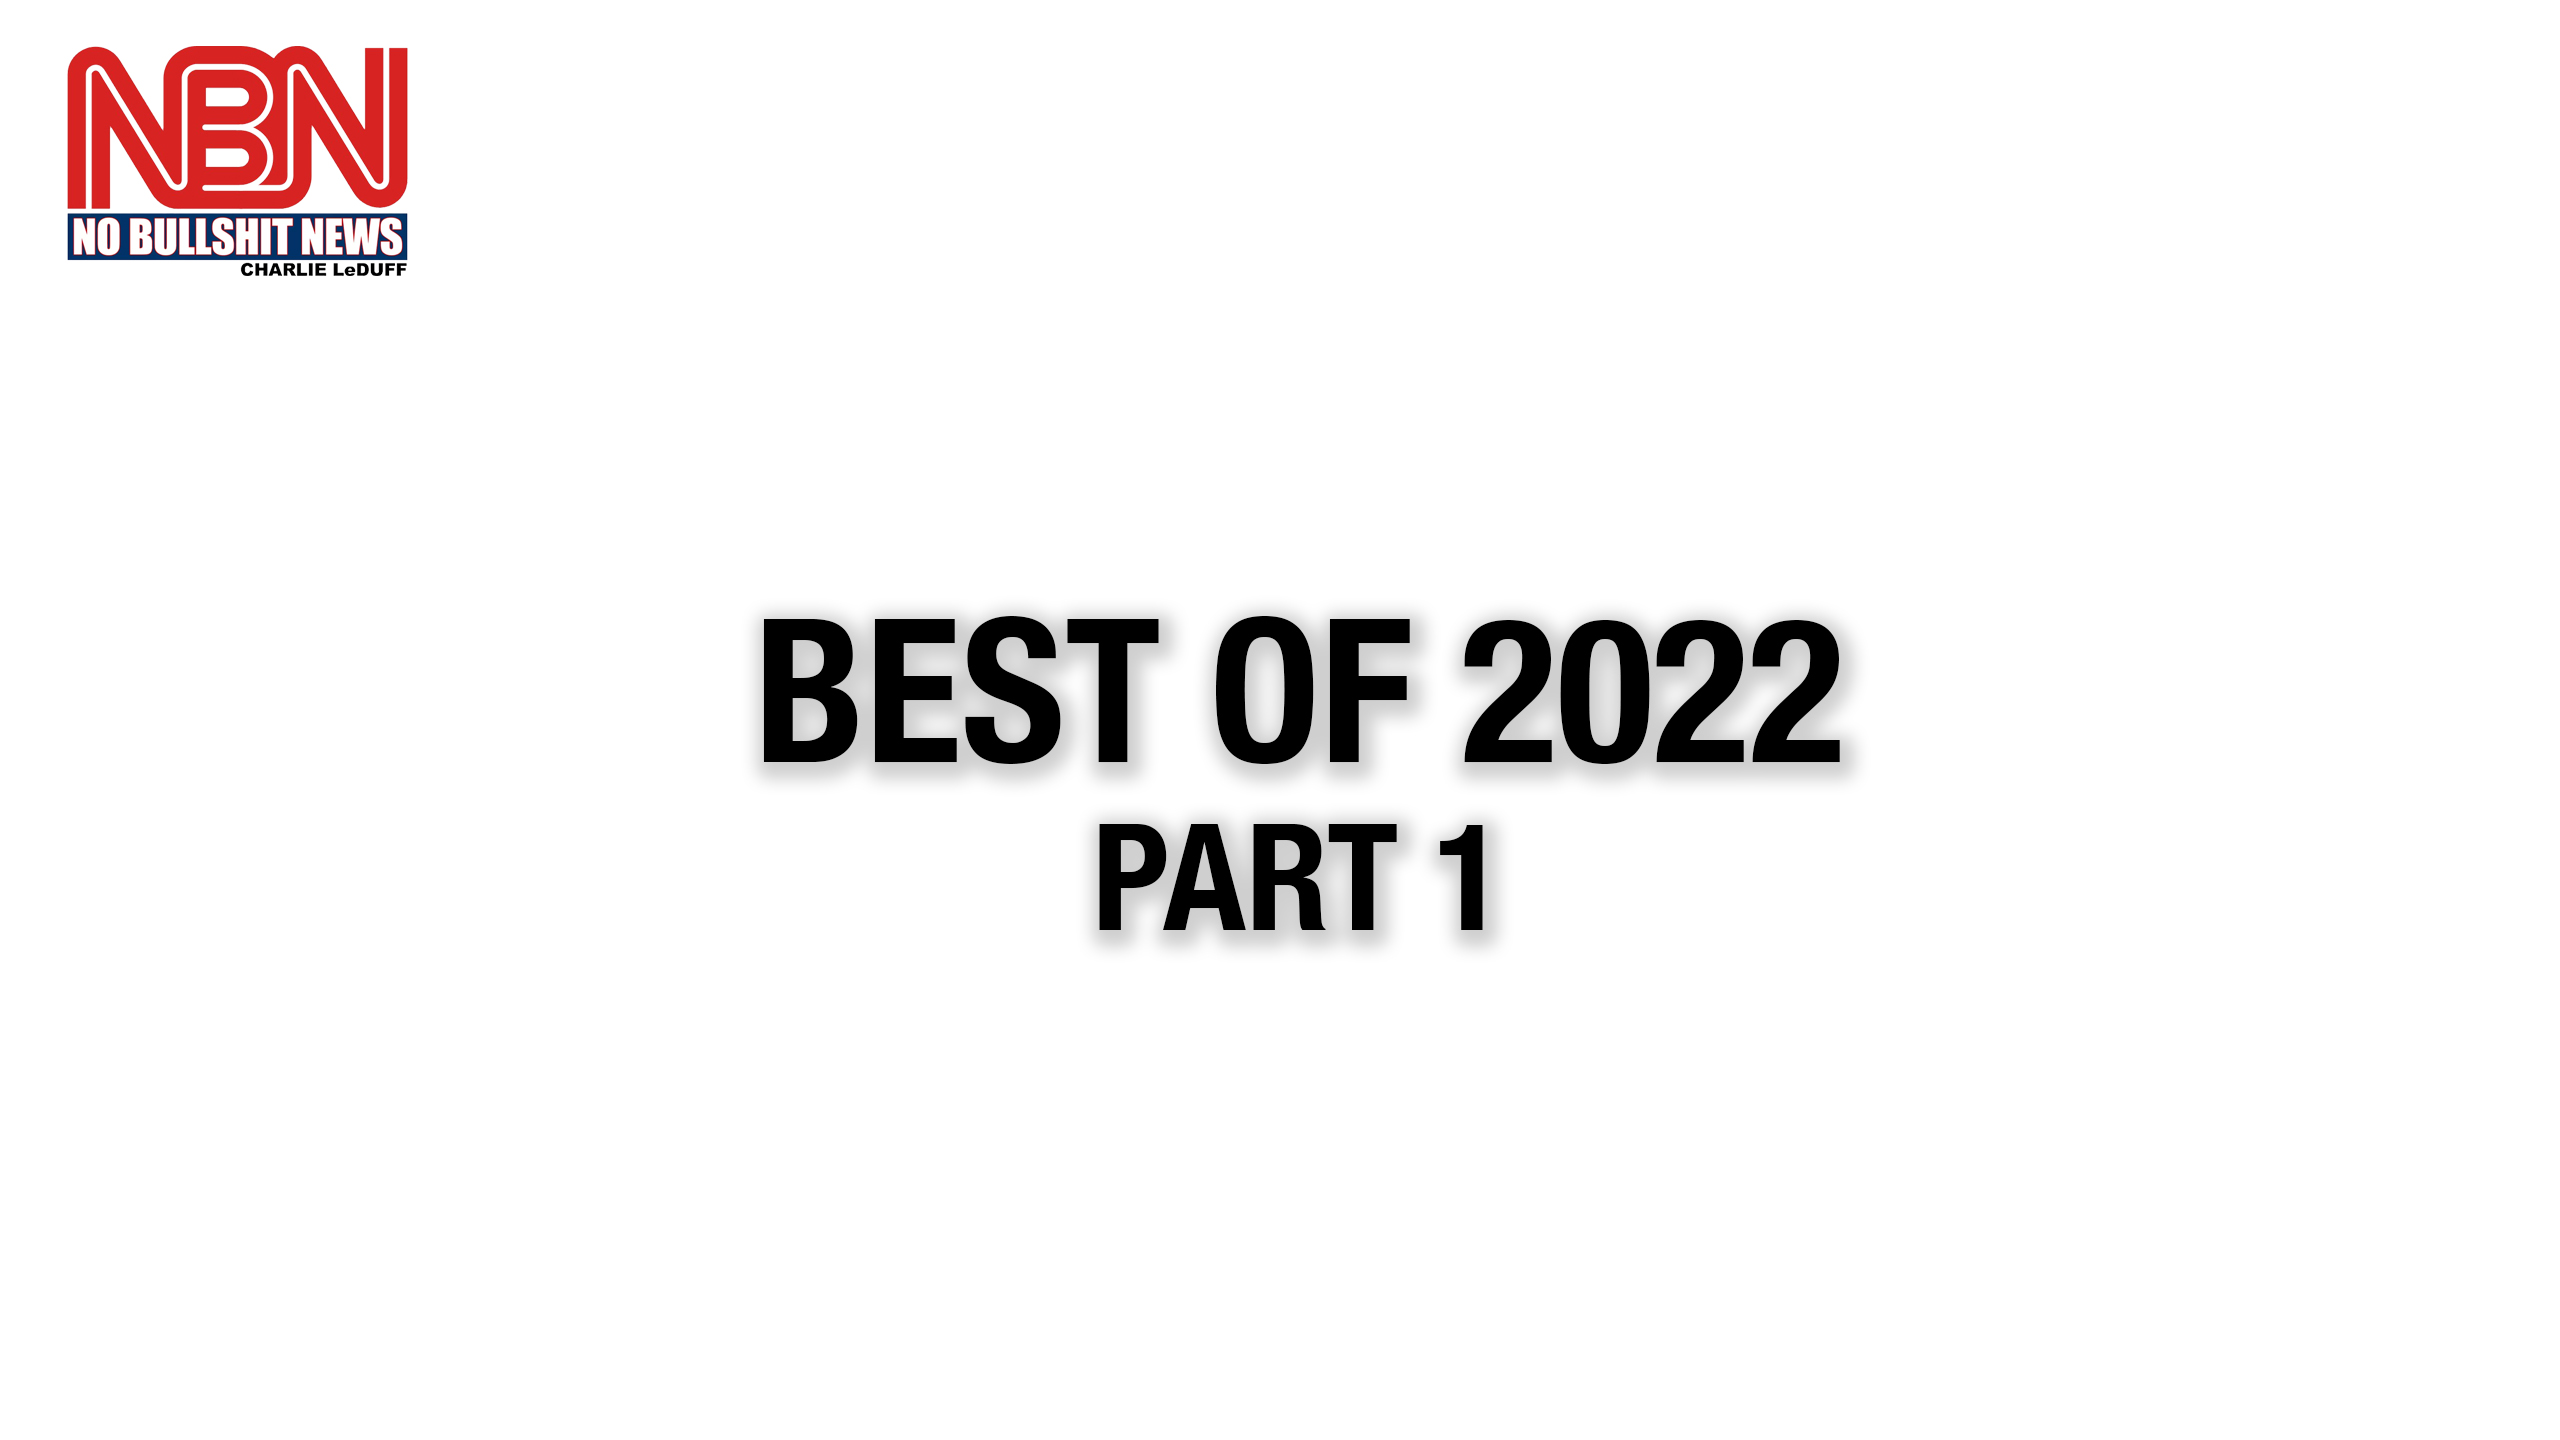 NBN Best of 2022 Part 1 – June 17, 2022